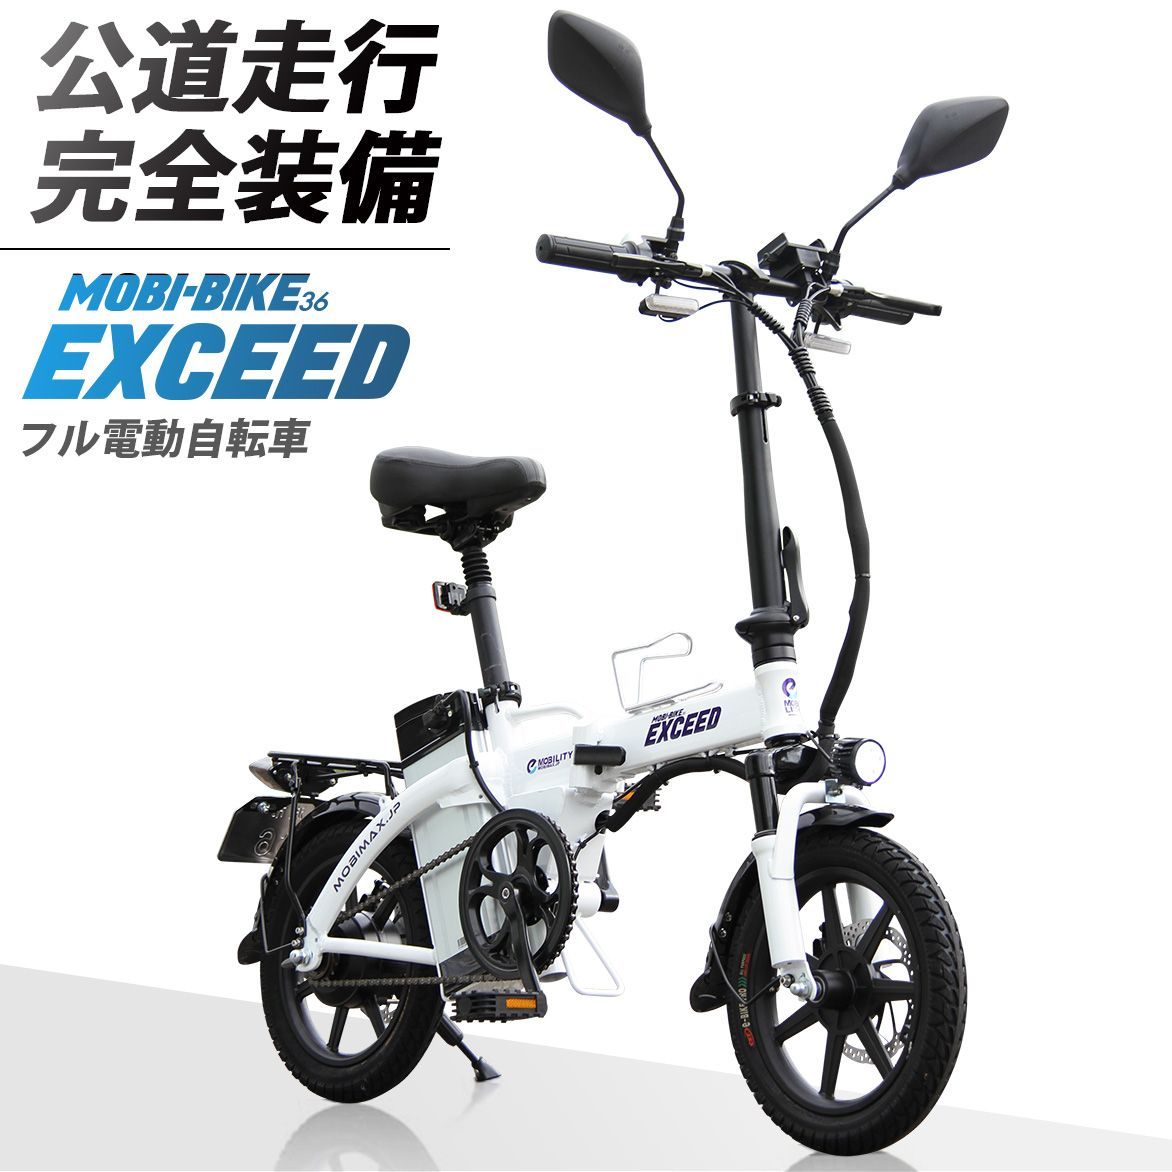 MOBIMAX MOBI-BIKE36 EXCEED フル電動自転車 - 自転車